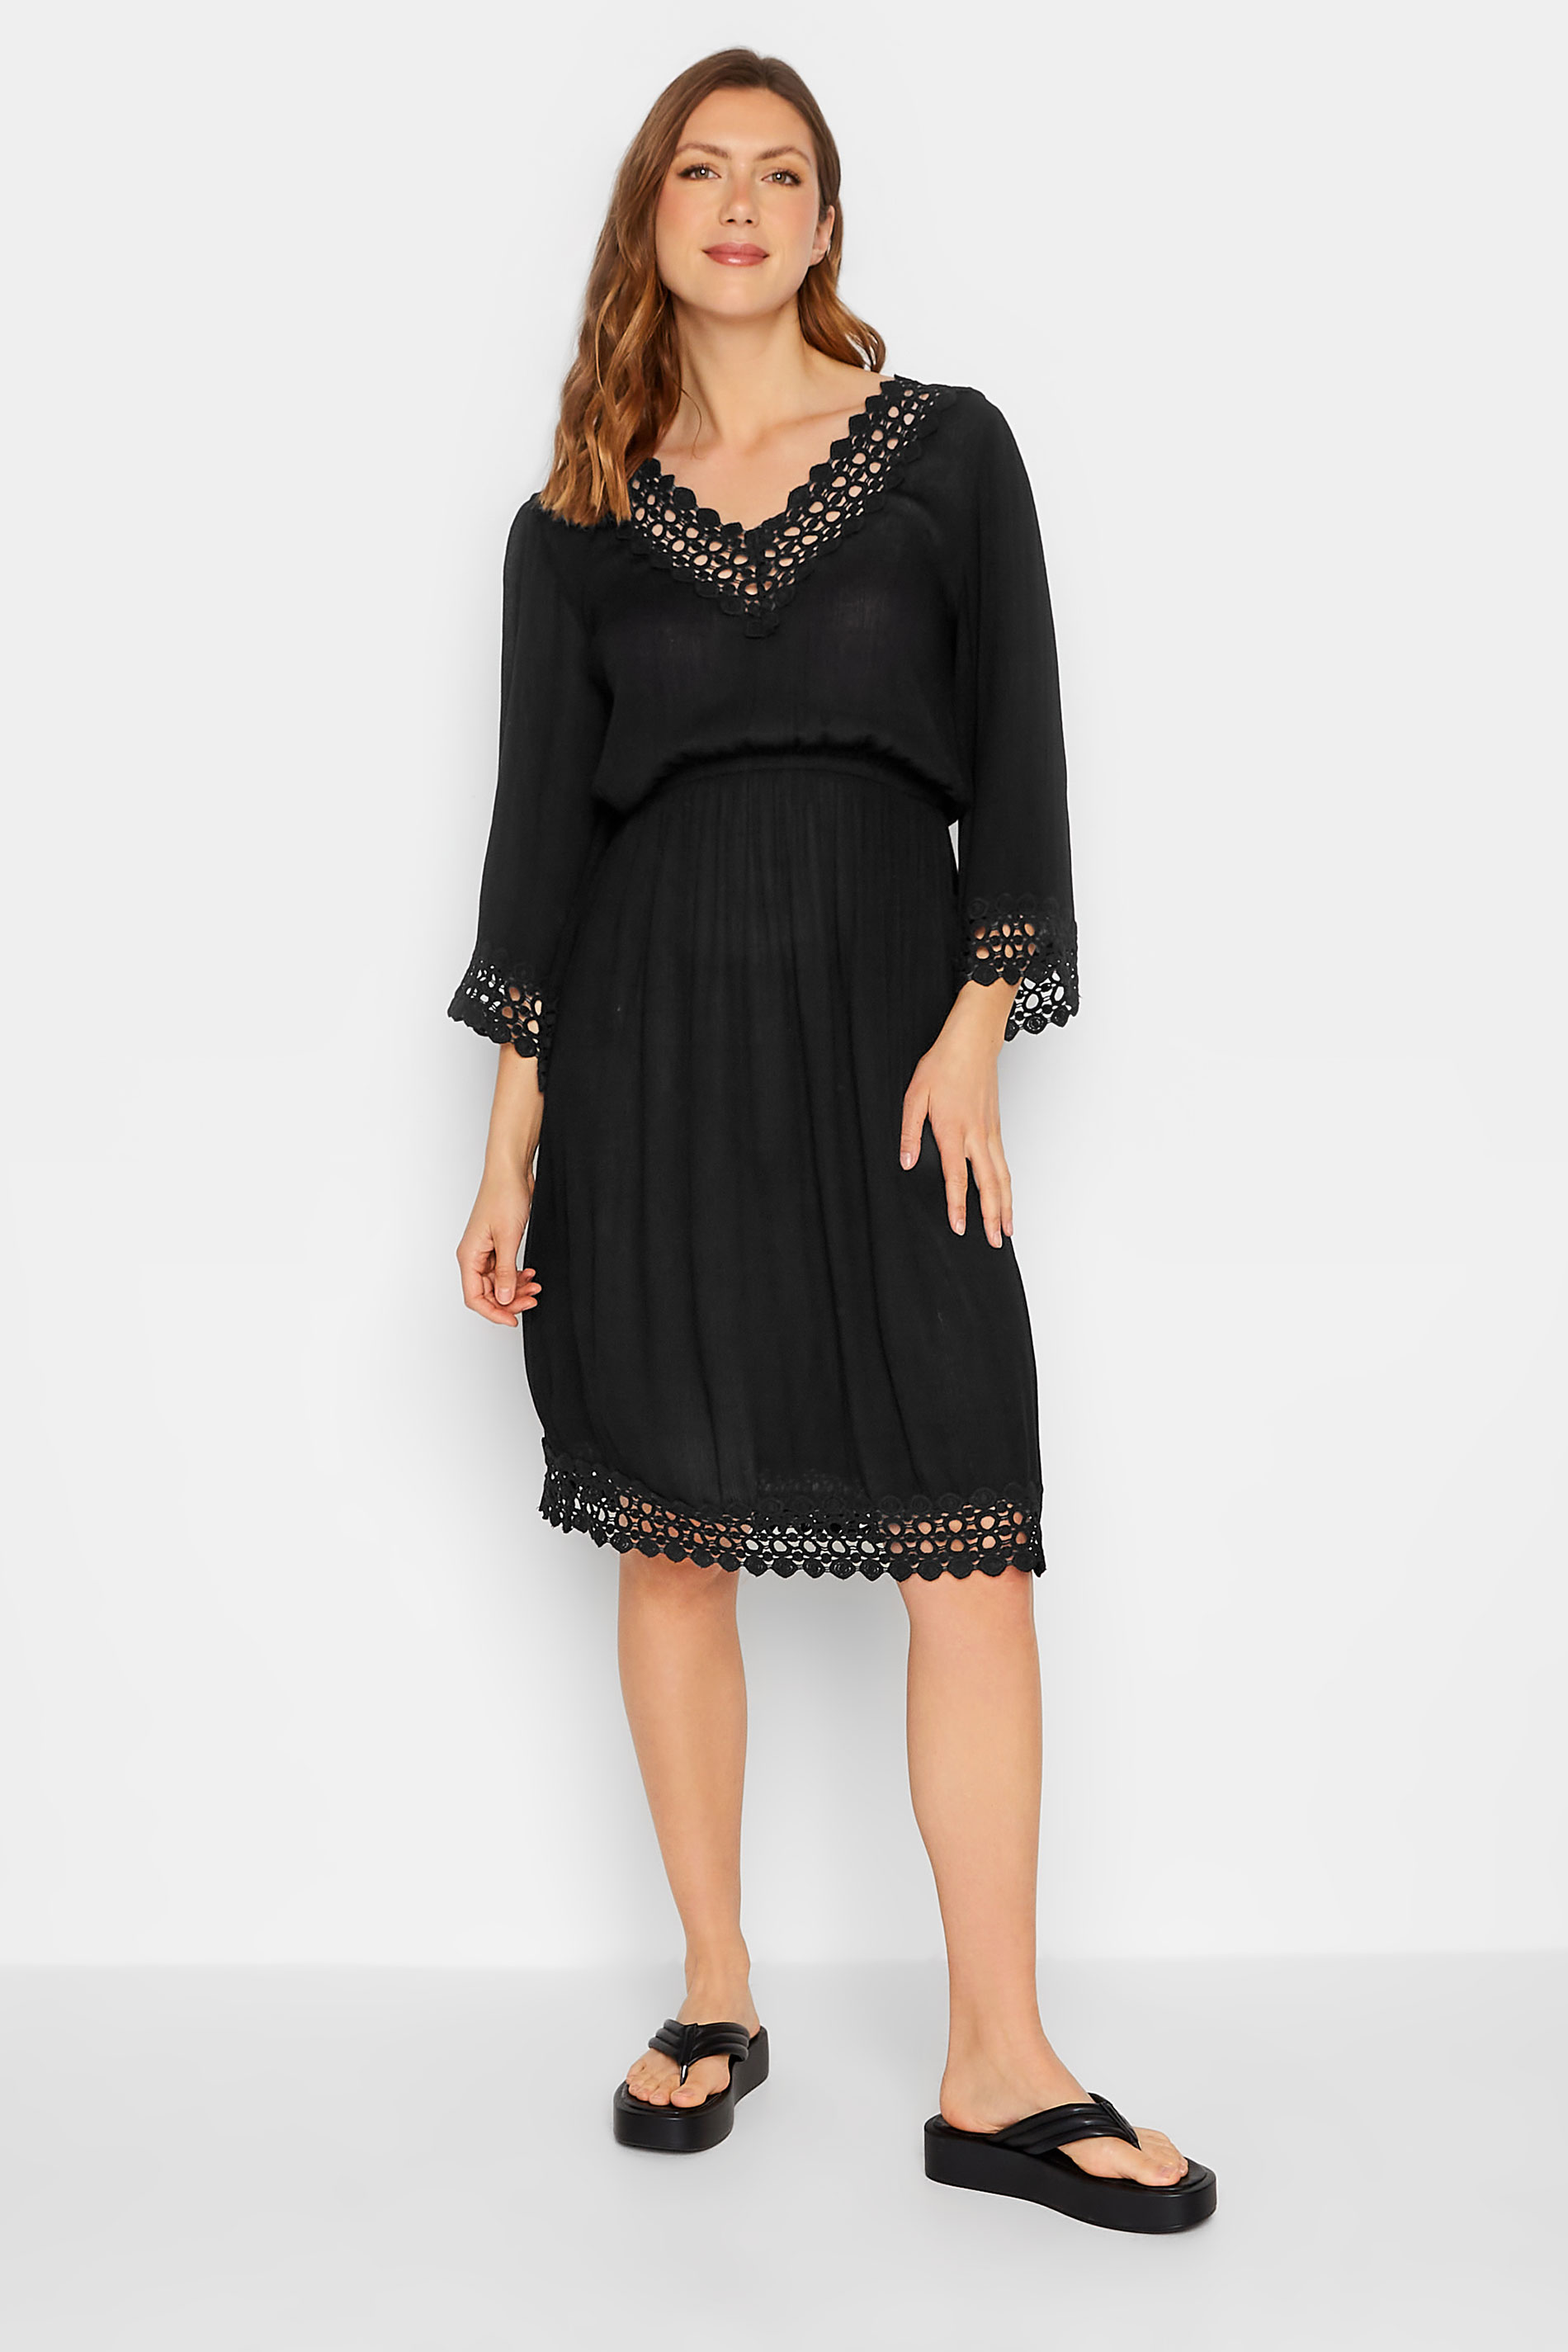 LTS Tall Black Crochet Kaftan Dress | Long Tall Sally  2